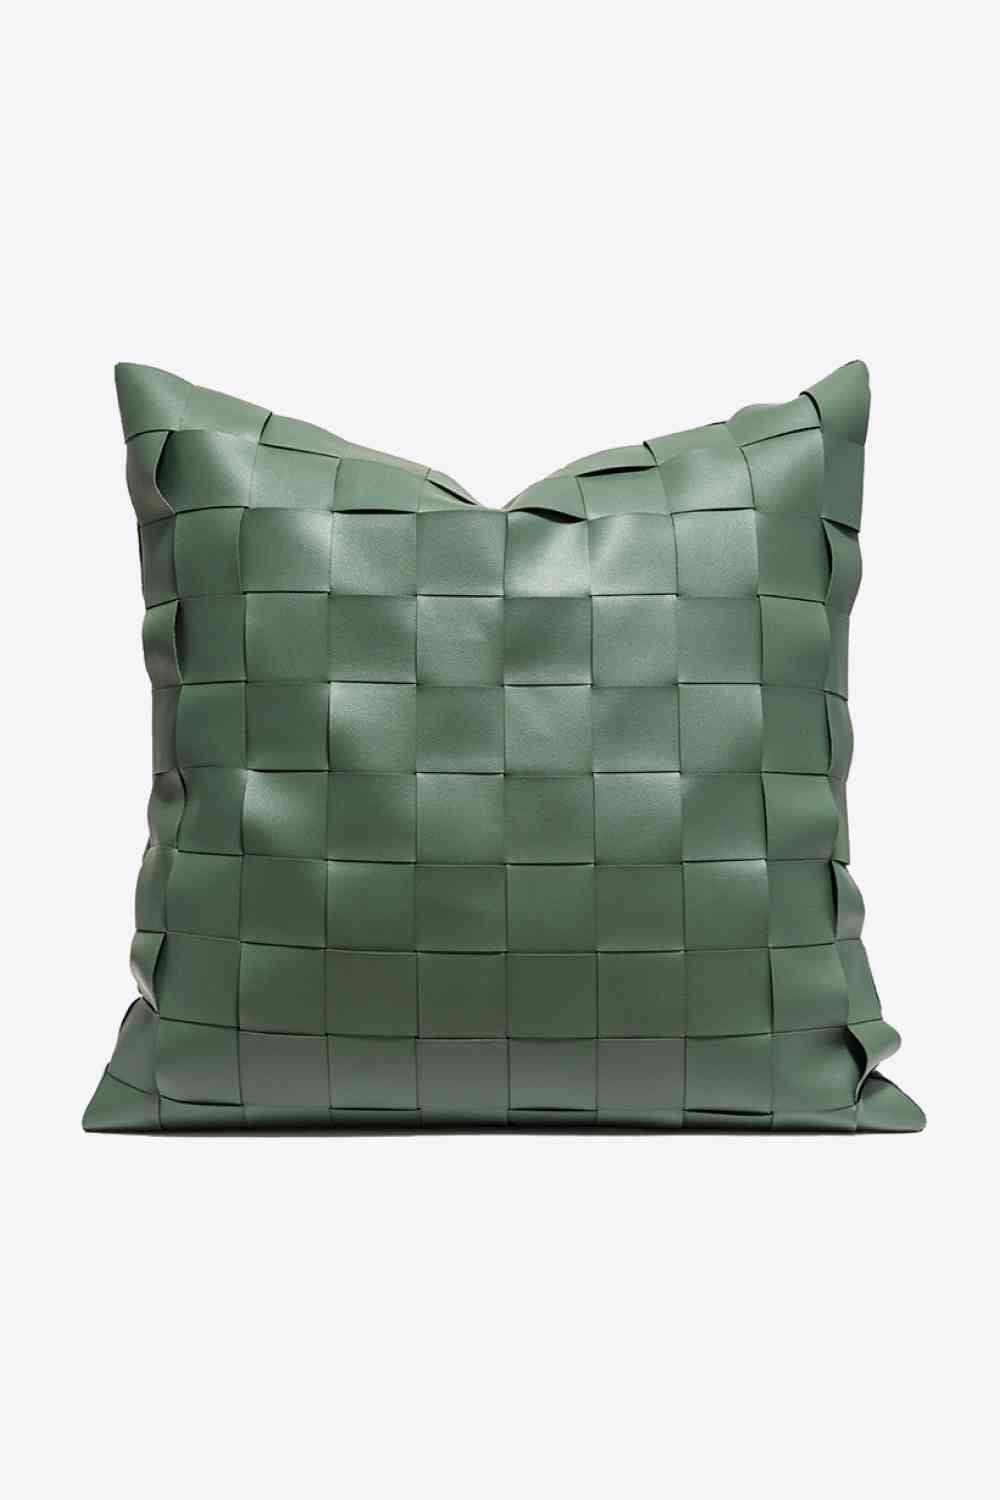 4-Pack Zip Closure Decorative Throw Pillow Cases - Tophatter Deals